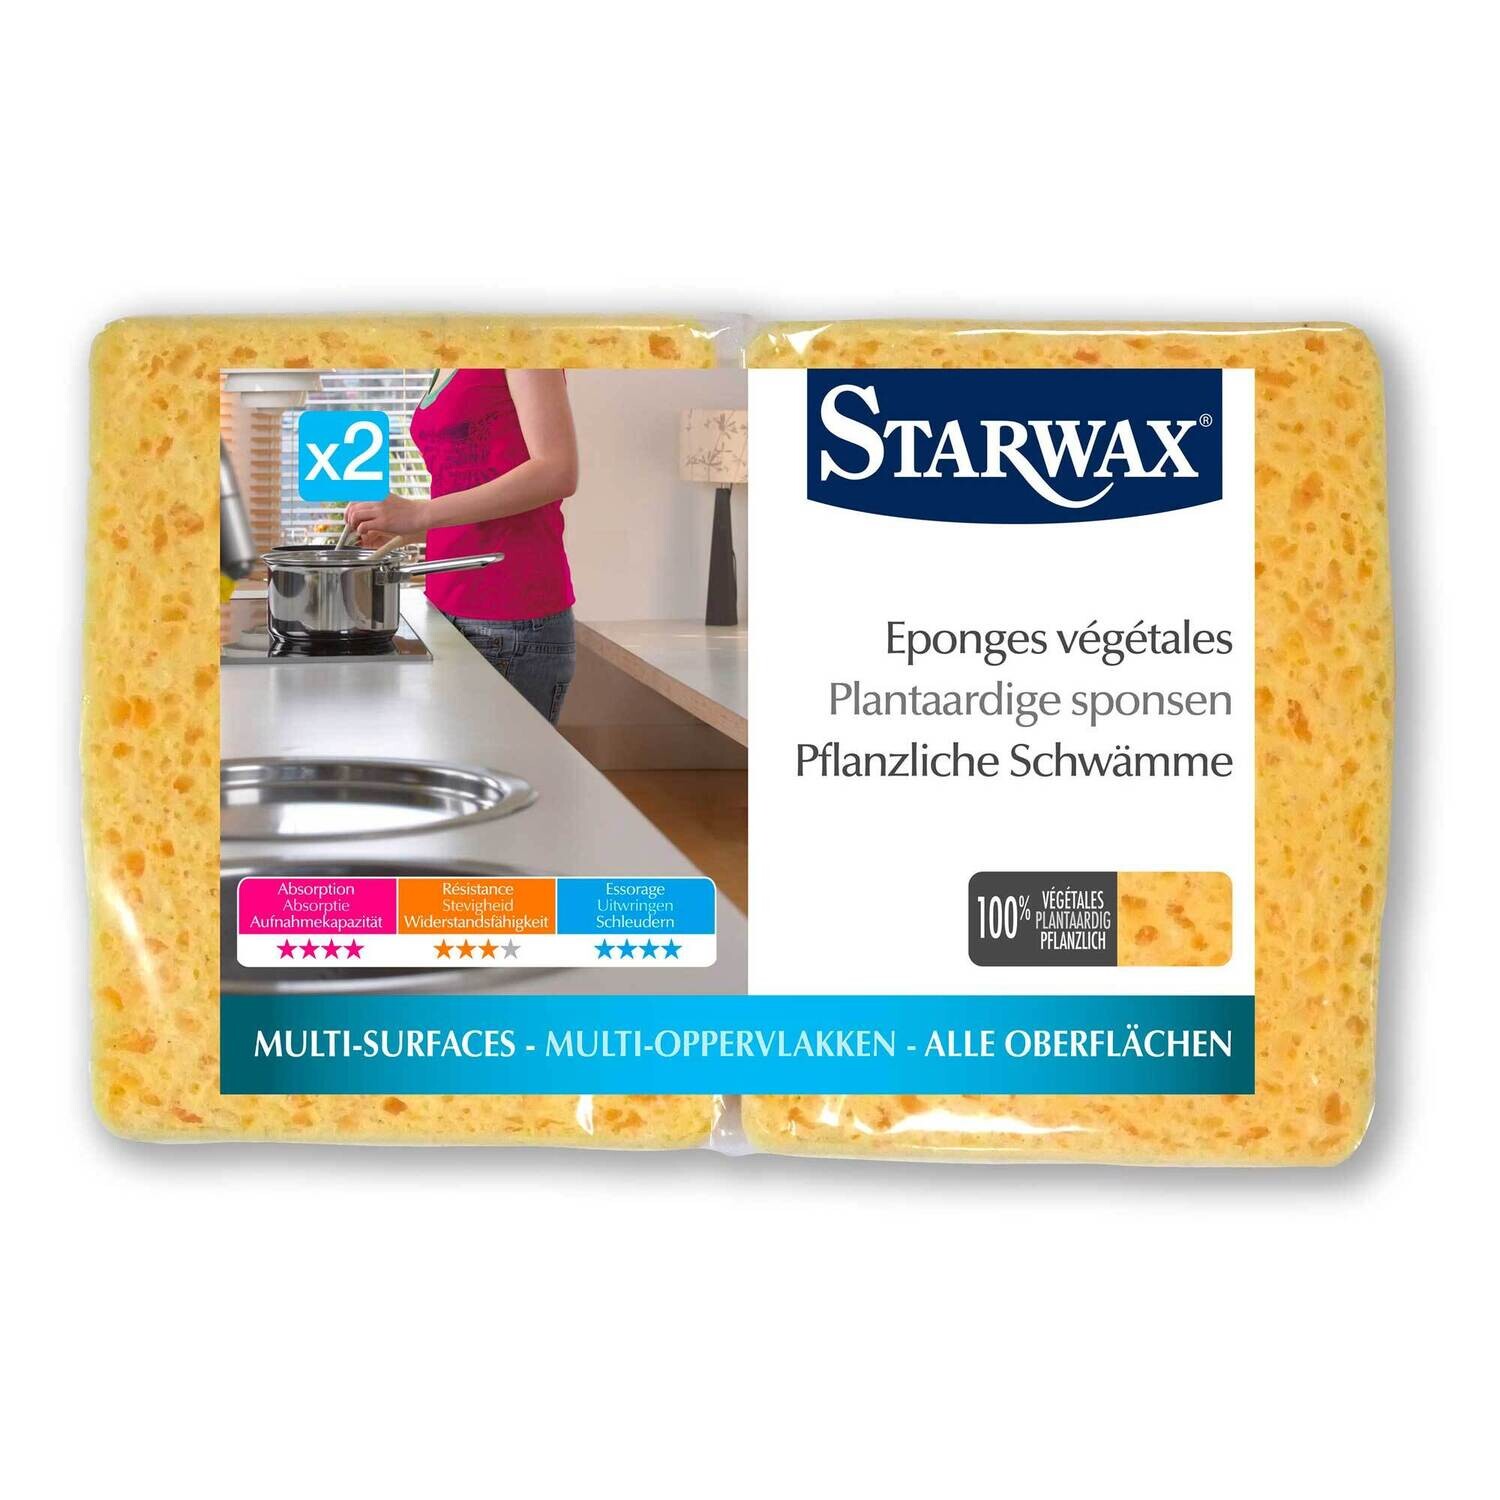 Starwax éponges végétales x2